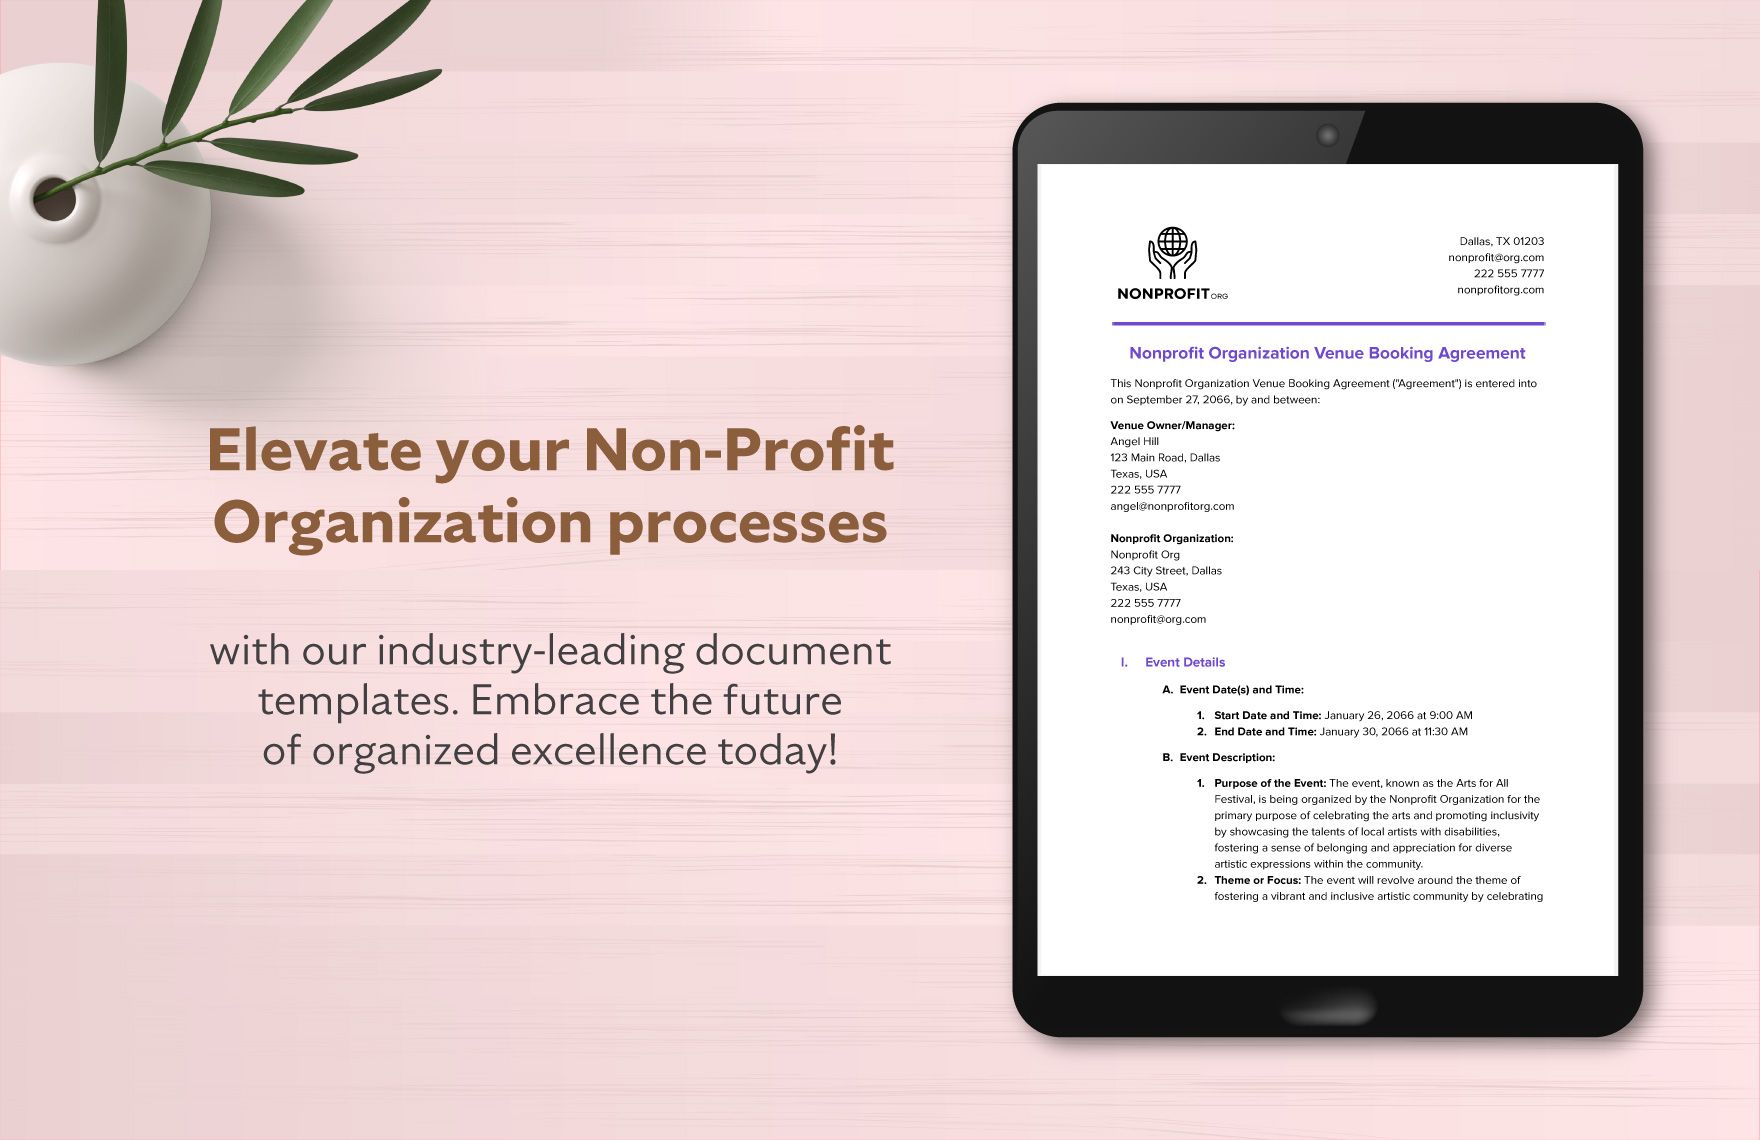 Nonprofit Organization Venue Booking Agreement Template